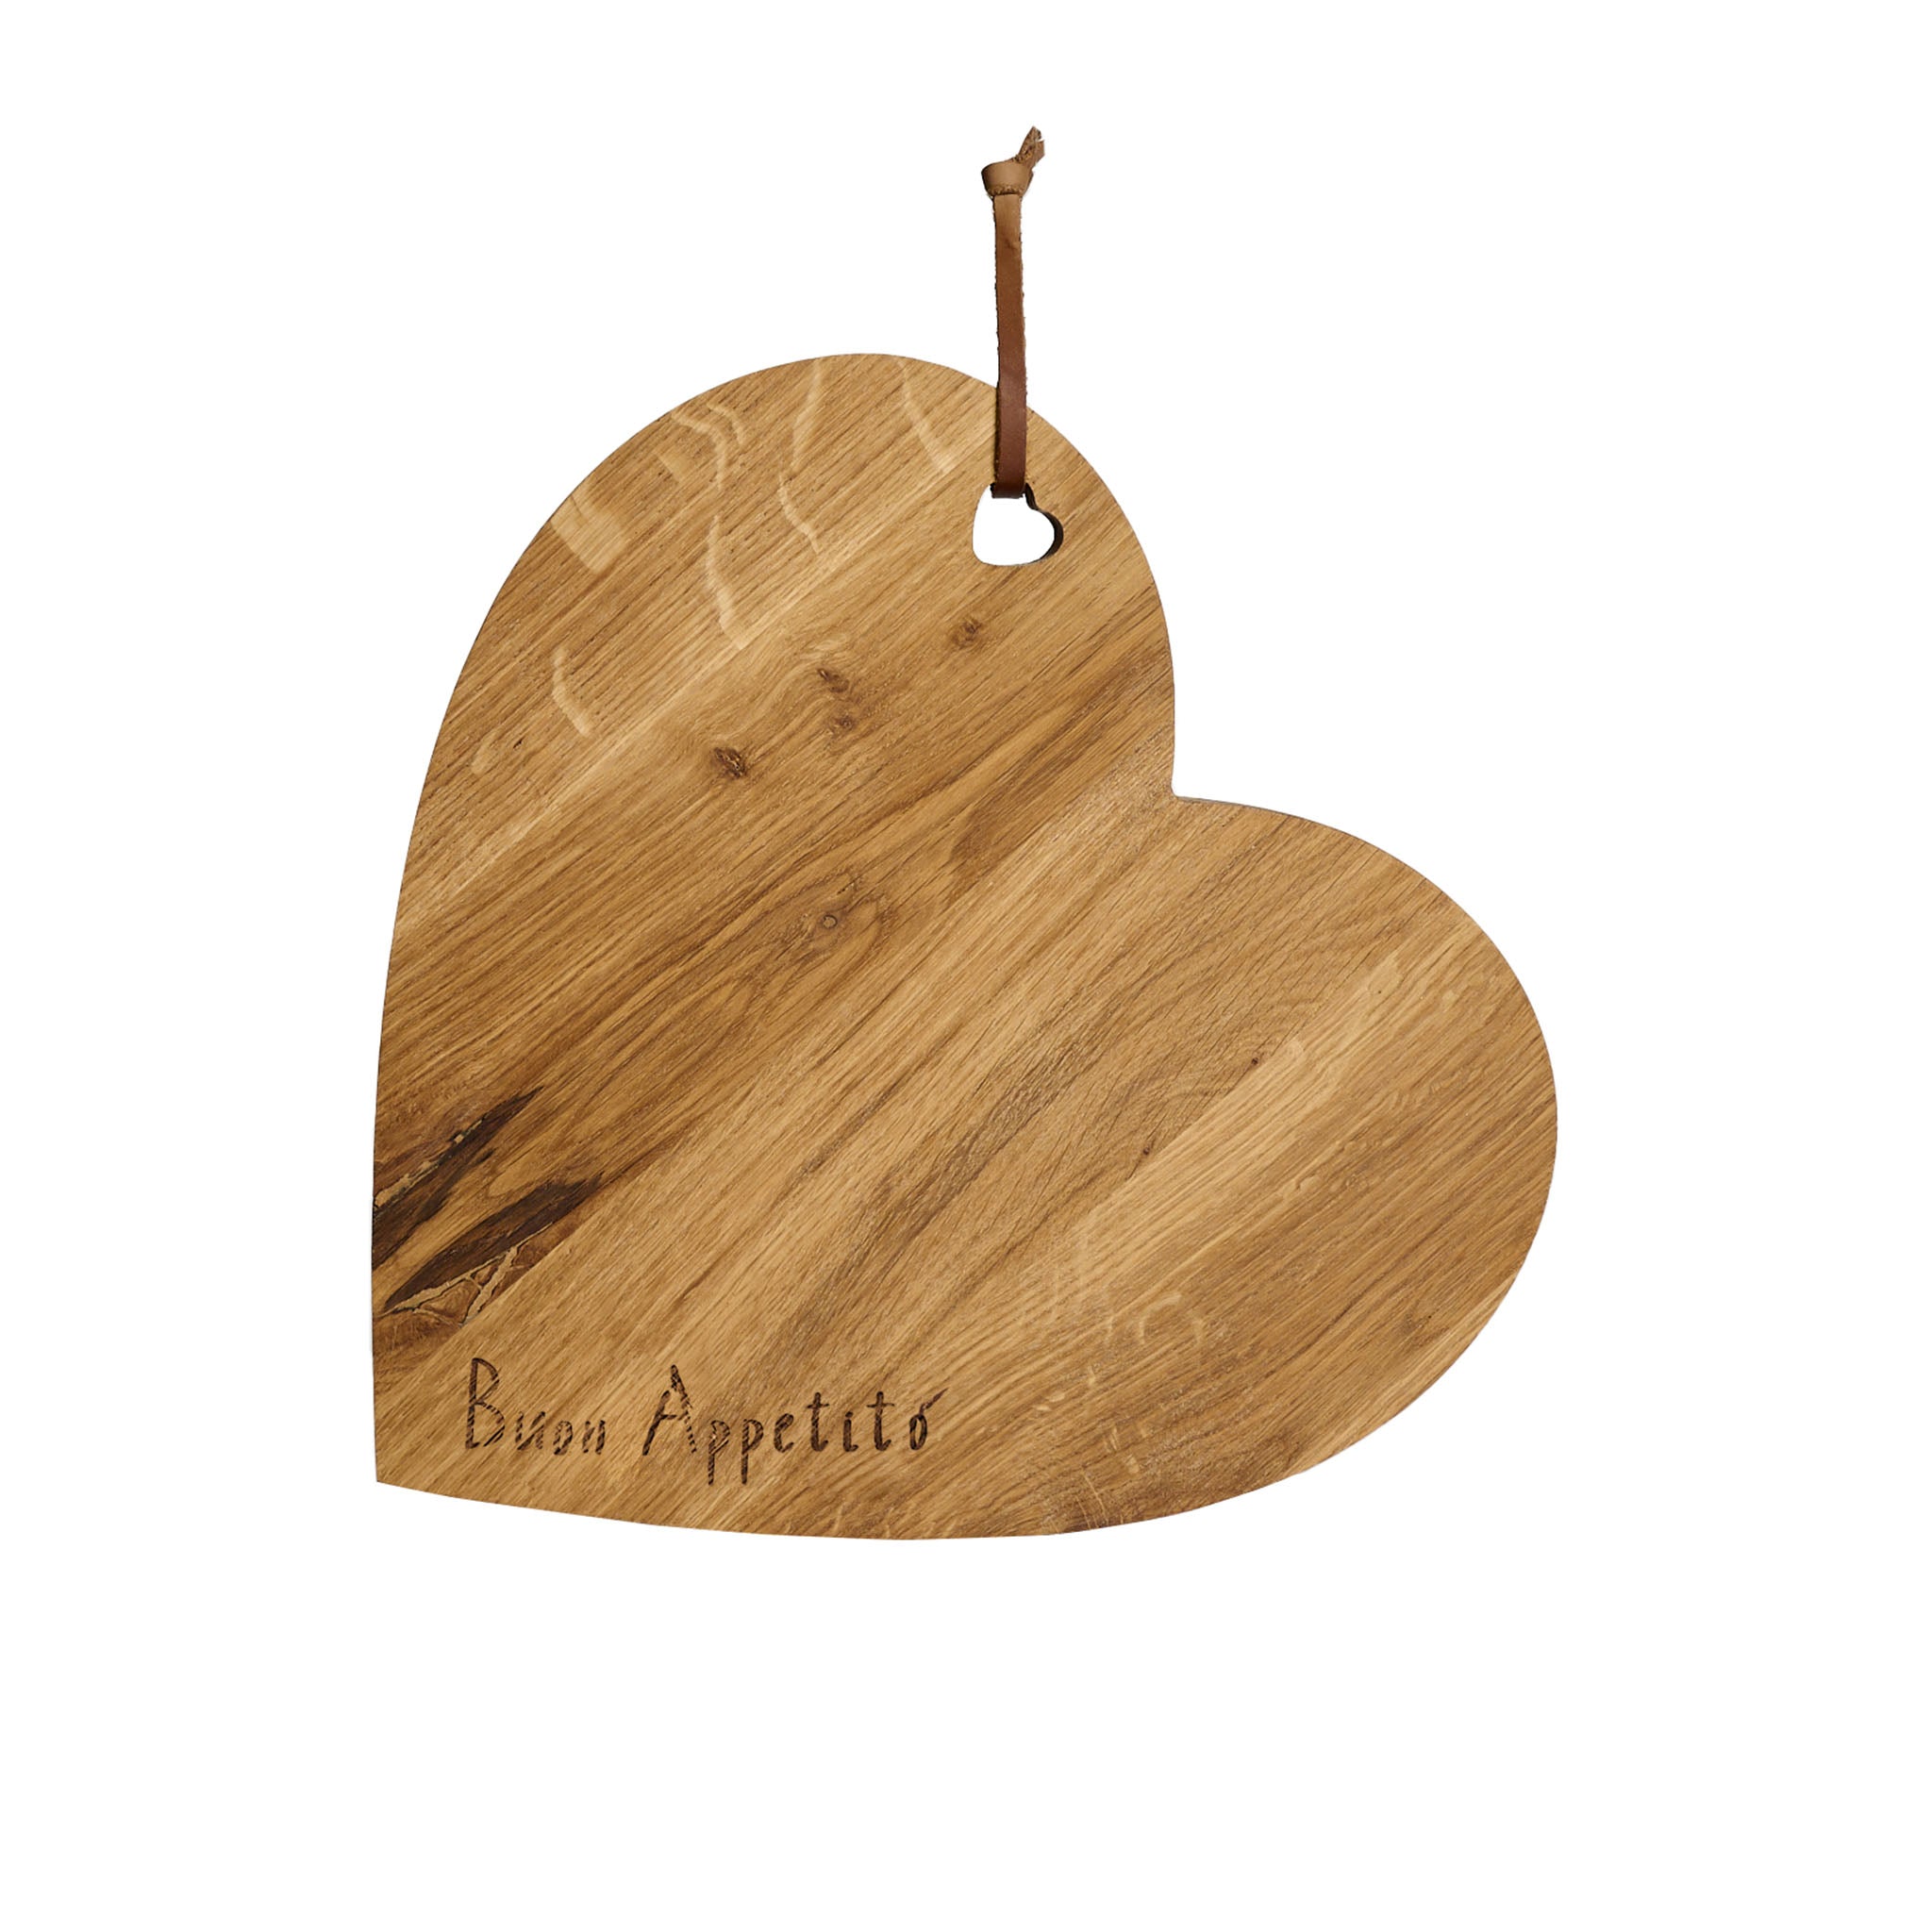 Buon Appetito heart-shaped cutting board